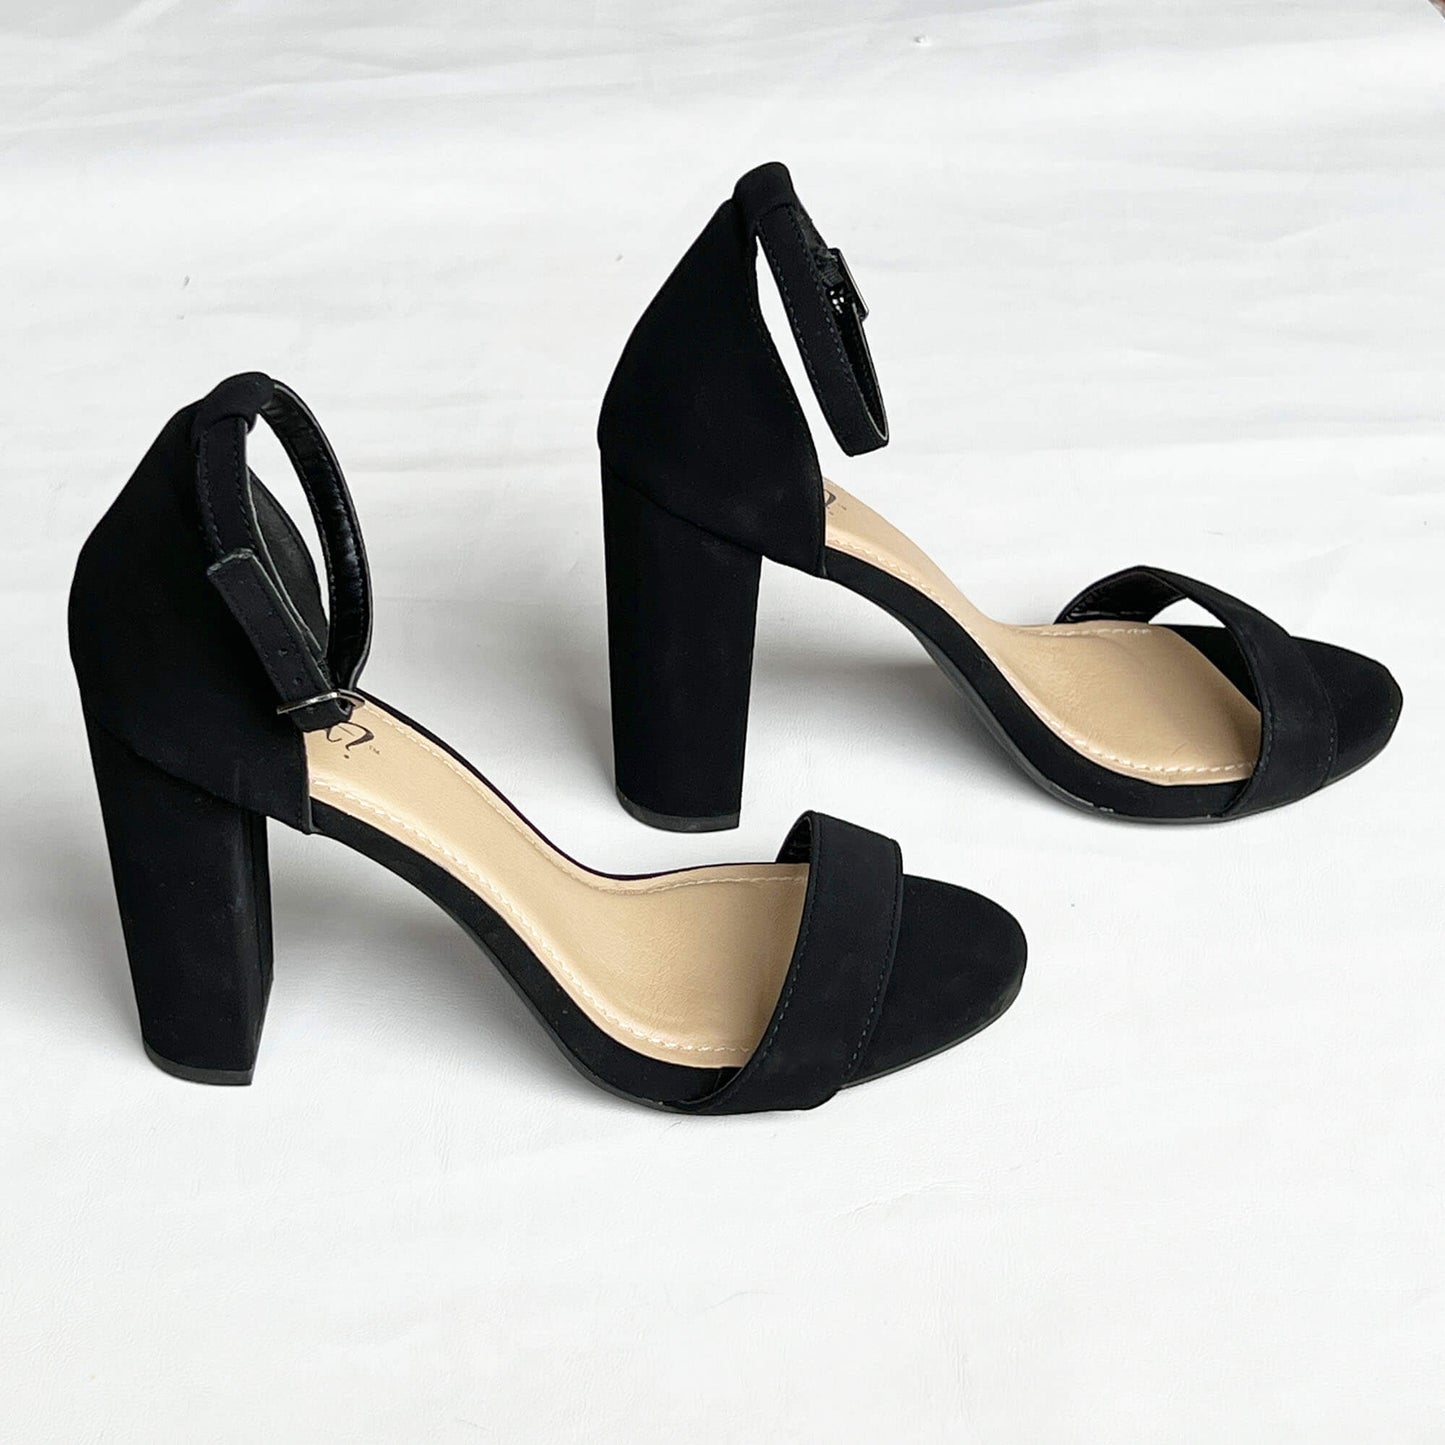 Black-Suede-Ankle-Strap-High-Heel-Sandals-by-Y-Not.-Side-View.-8M.-Shop-eBargainsAndDeals.com